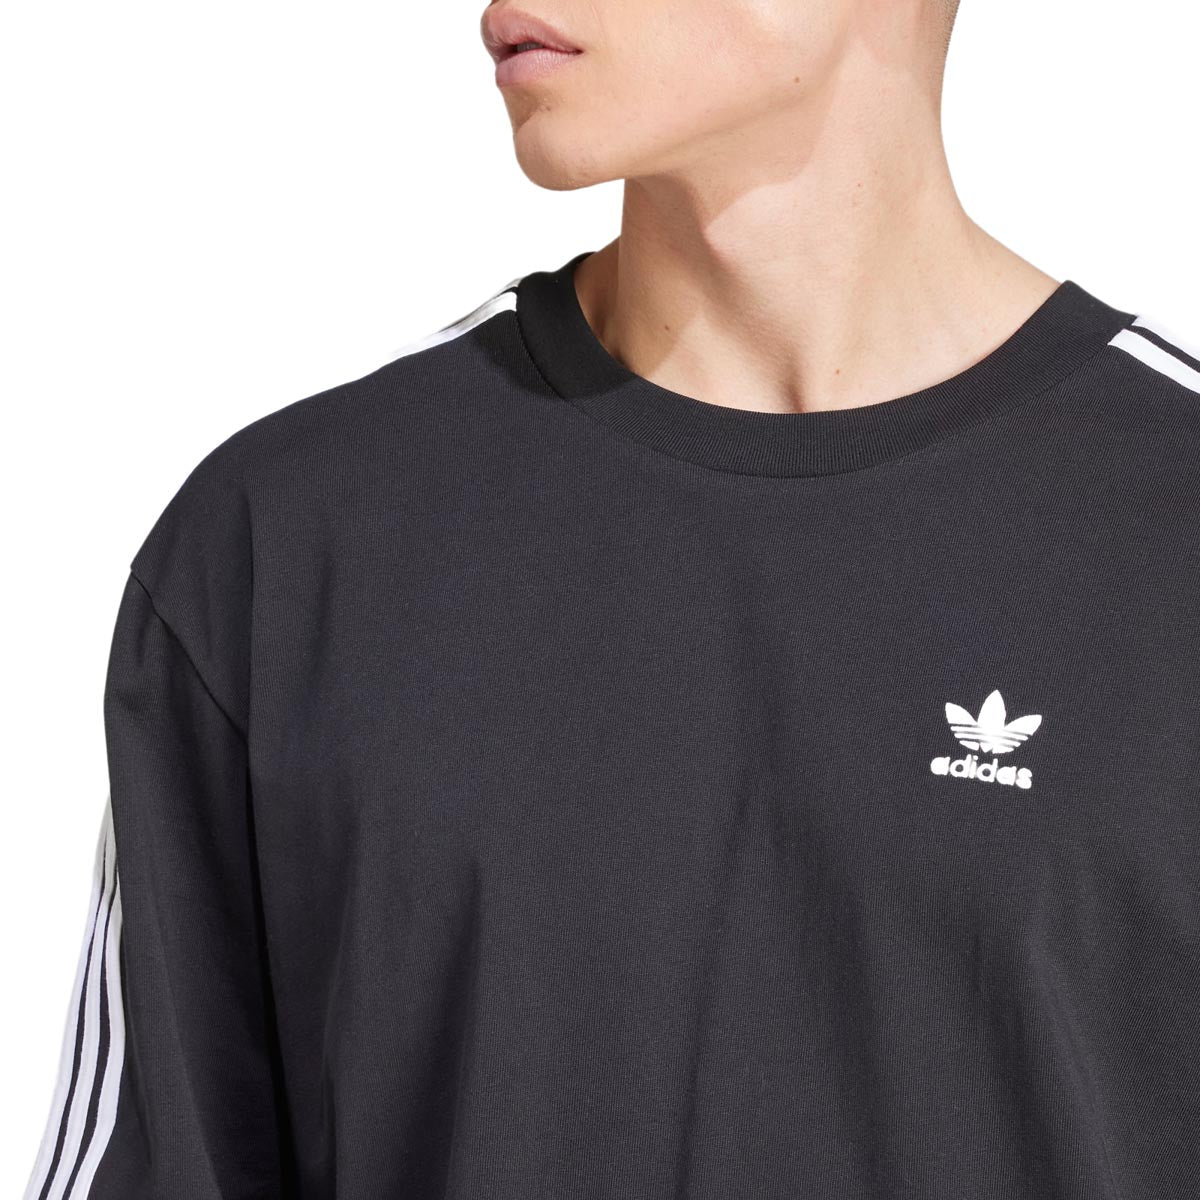 Adidas Originals Adicolor Oversized T-Shirt - Black image 4